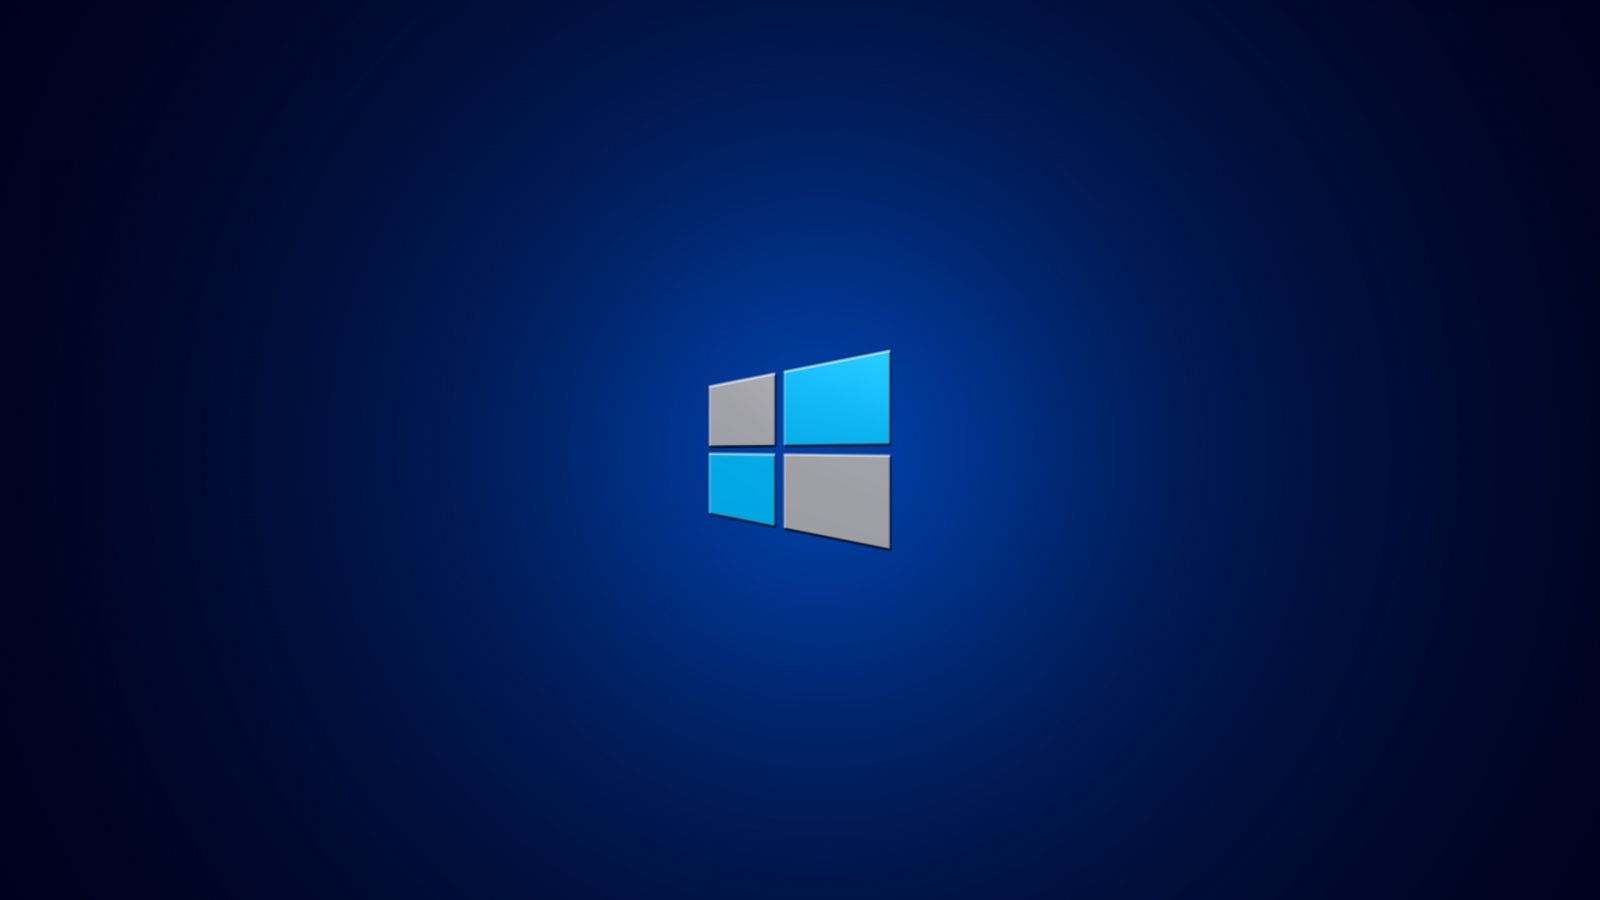 Windows 8 Background for 1600 x 900 HDTV resolution